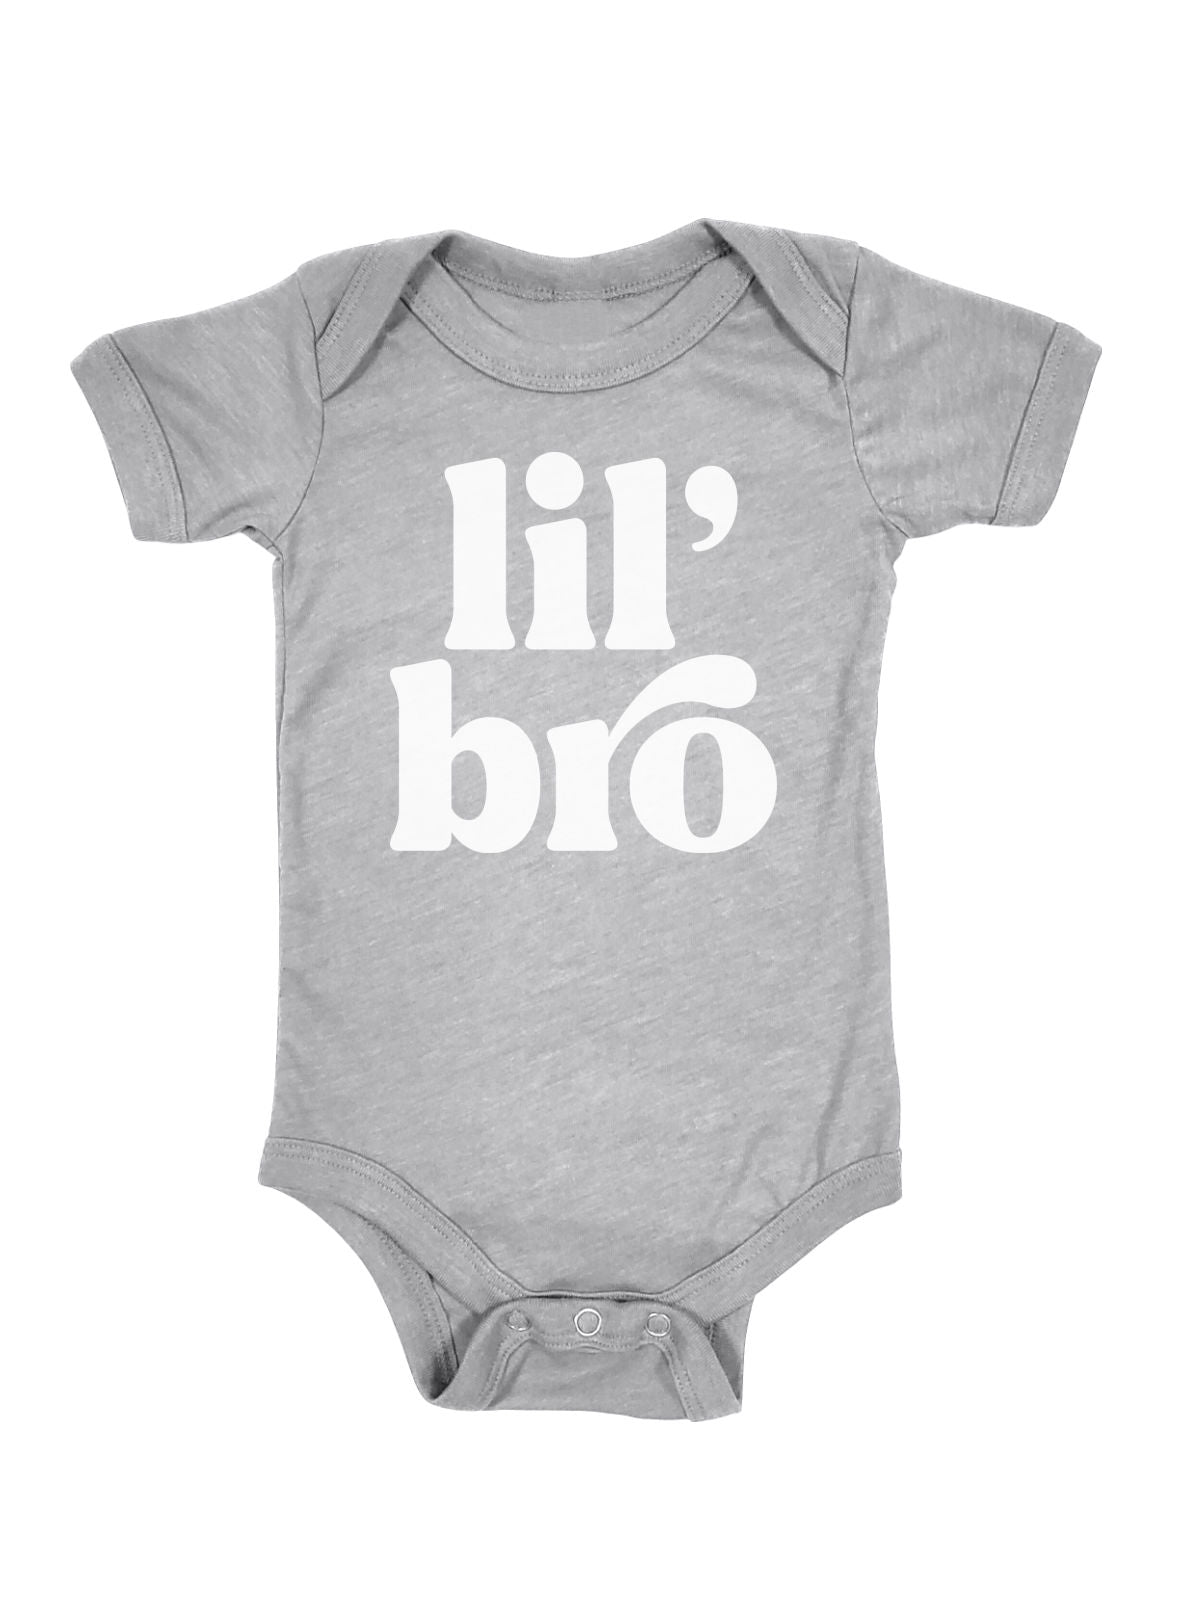 Lil Bro Baby Boy Bodysuit in Heather Gray